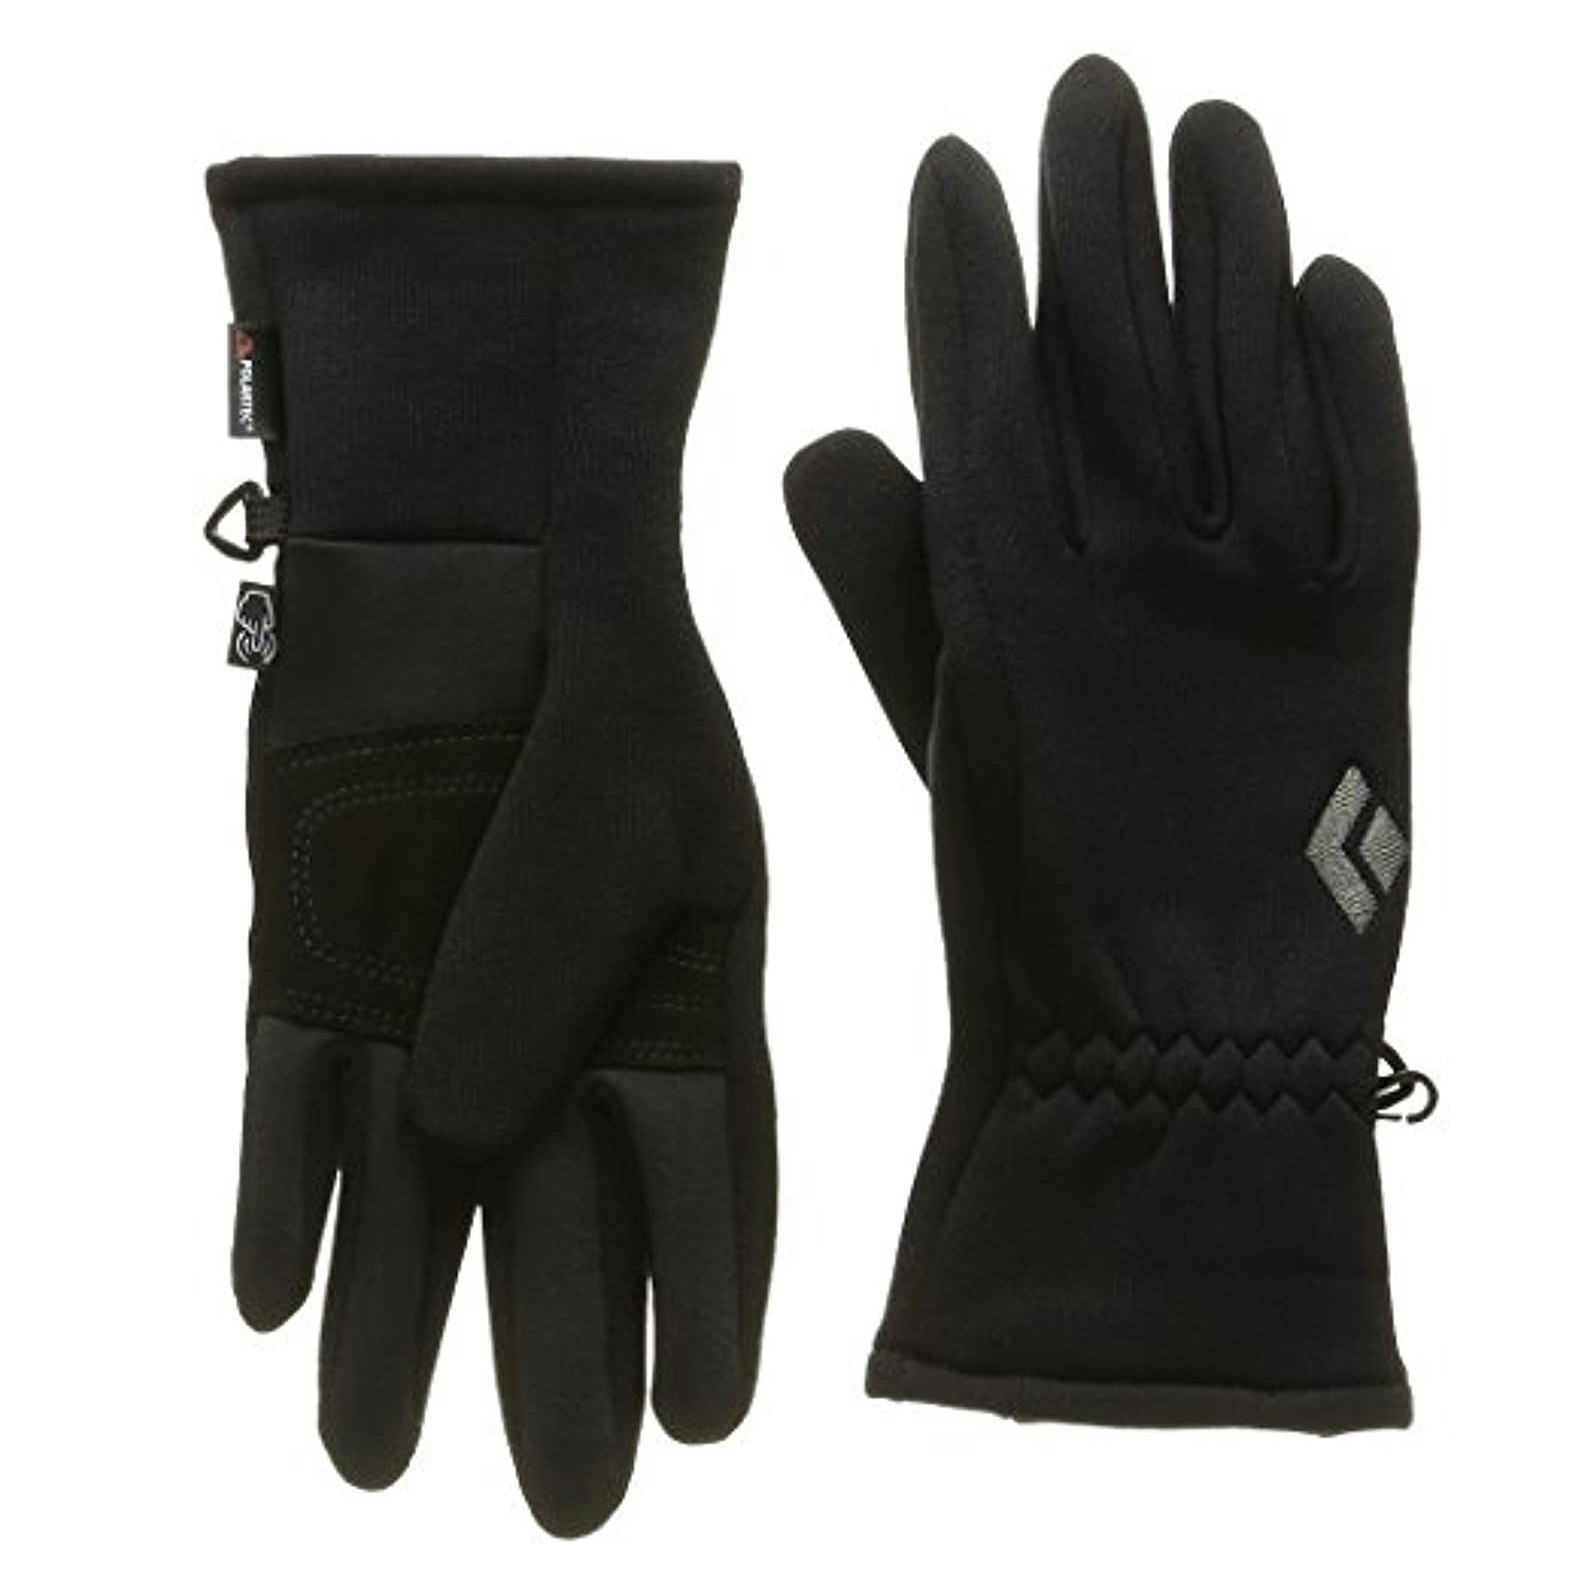 black diamond lightweight screentap glove